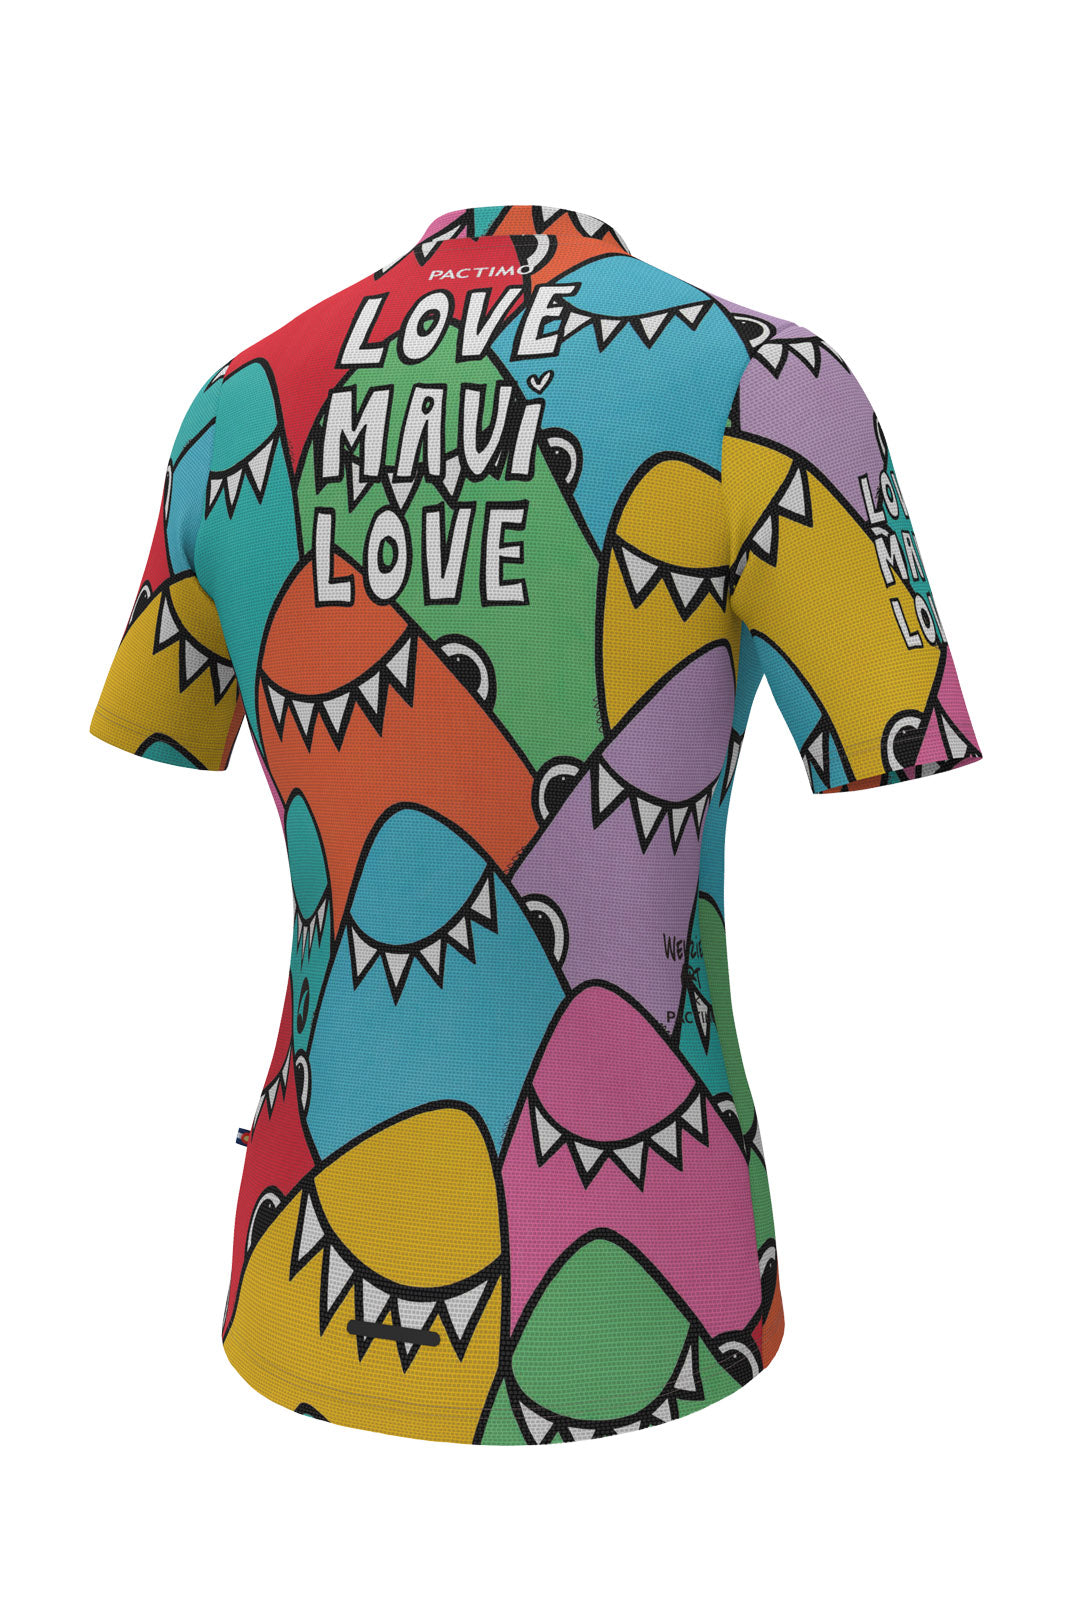 Women's Maui Relief Shirt - Rainbow Welzie Design - Back View